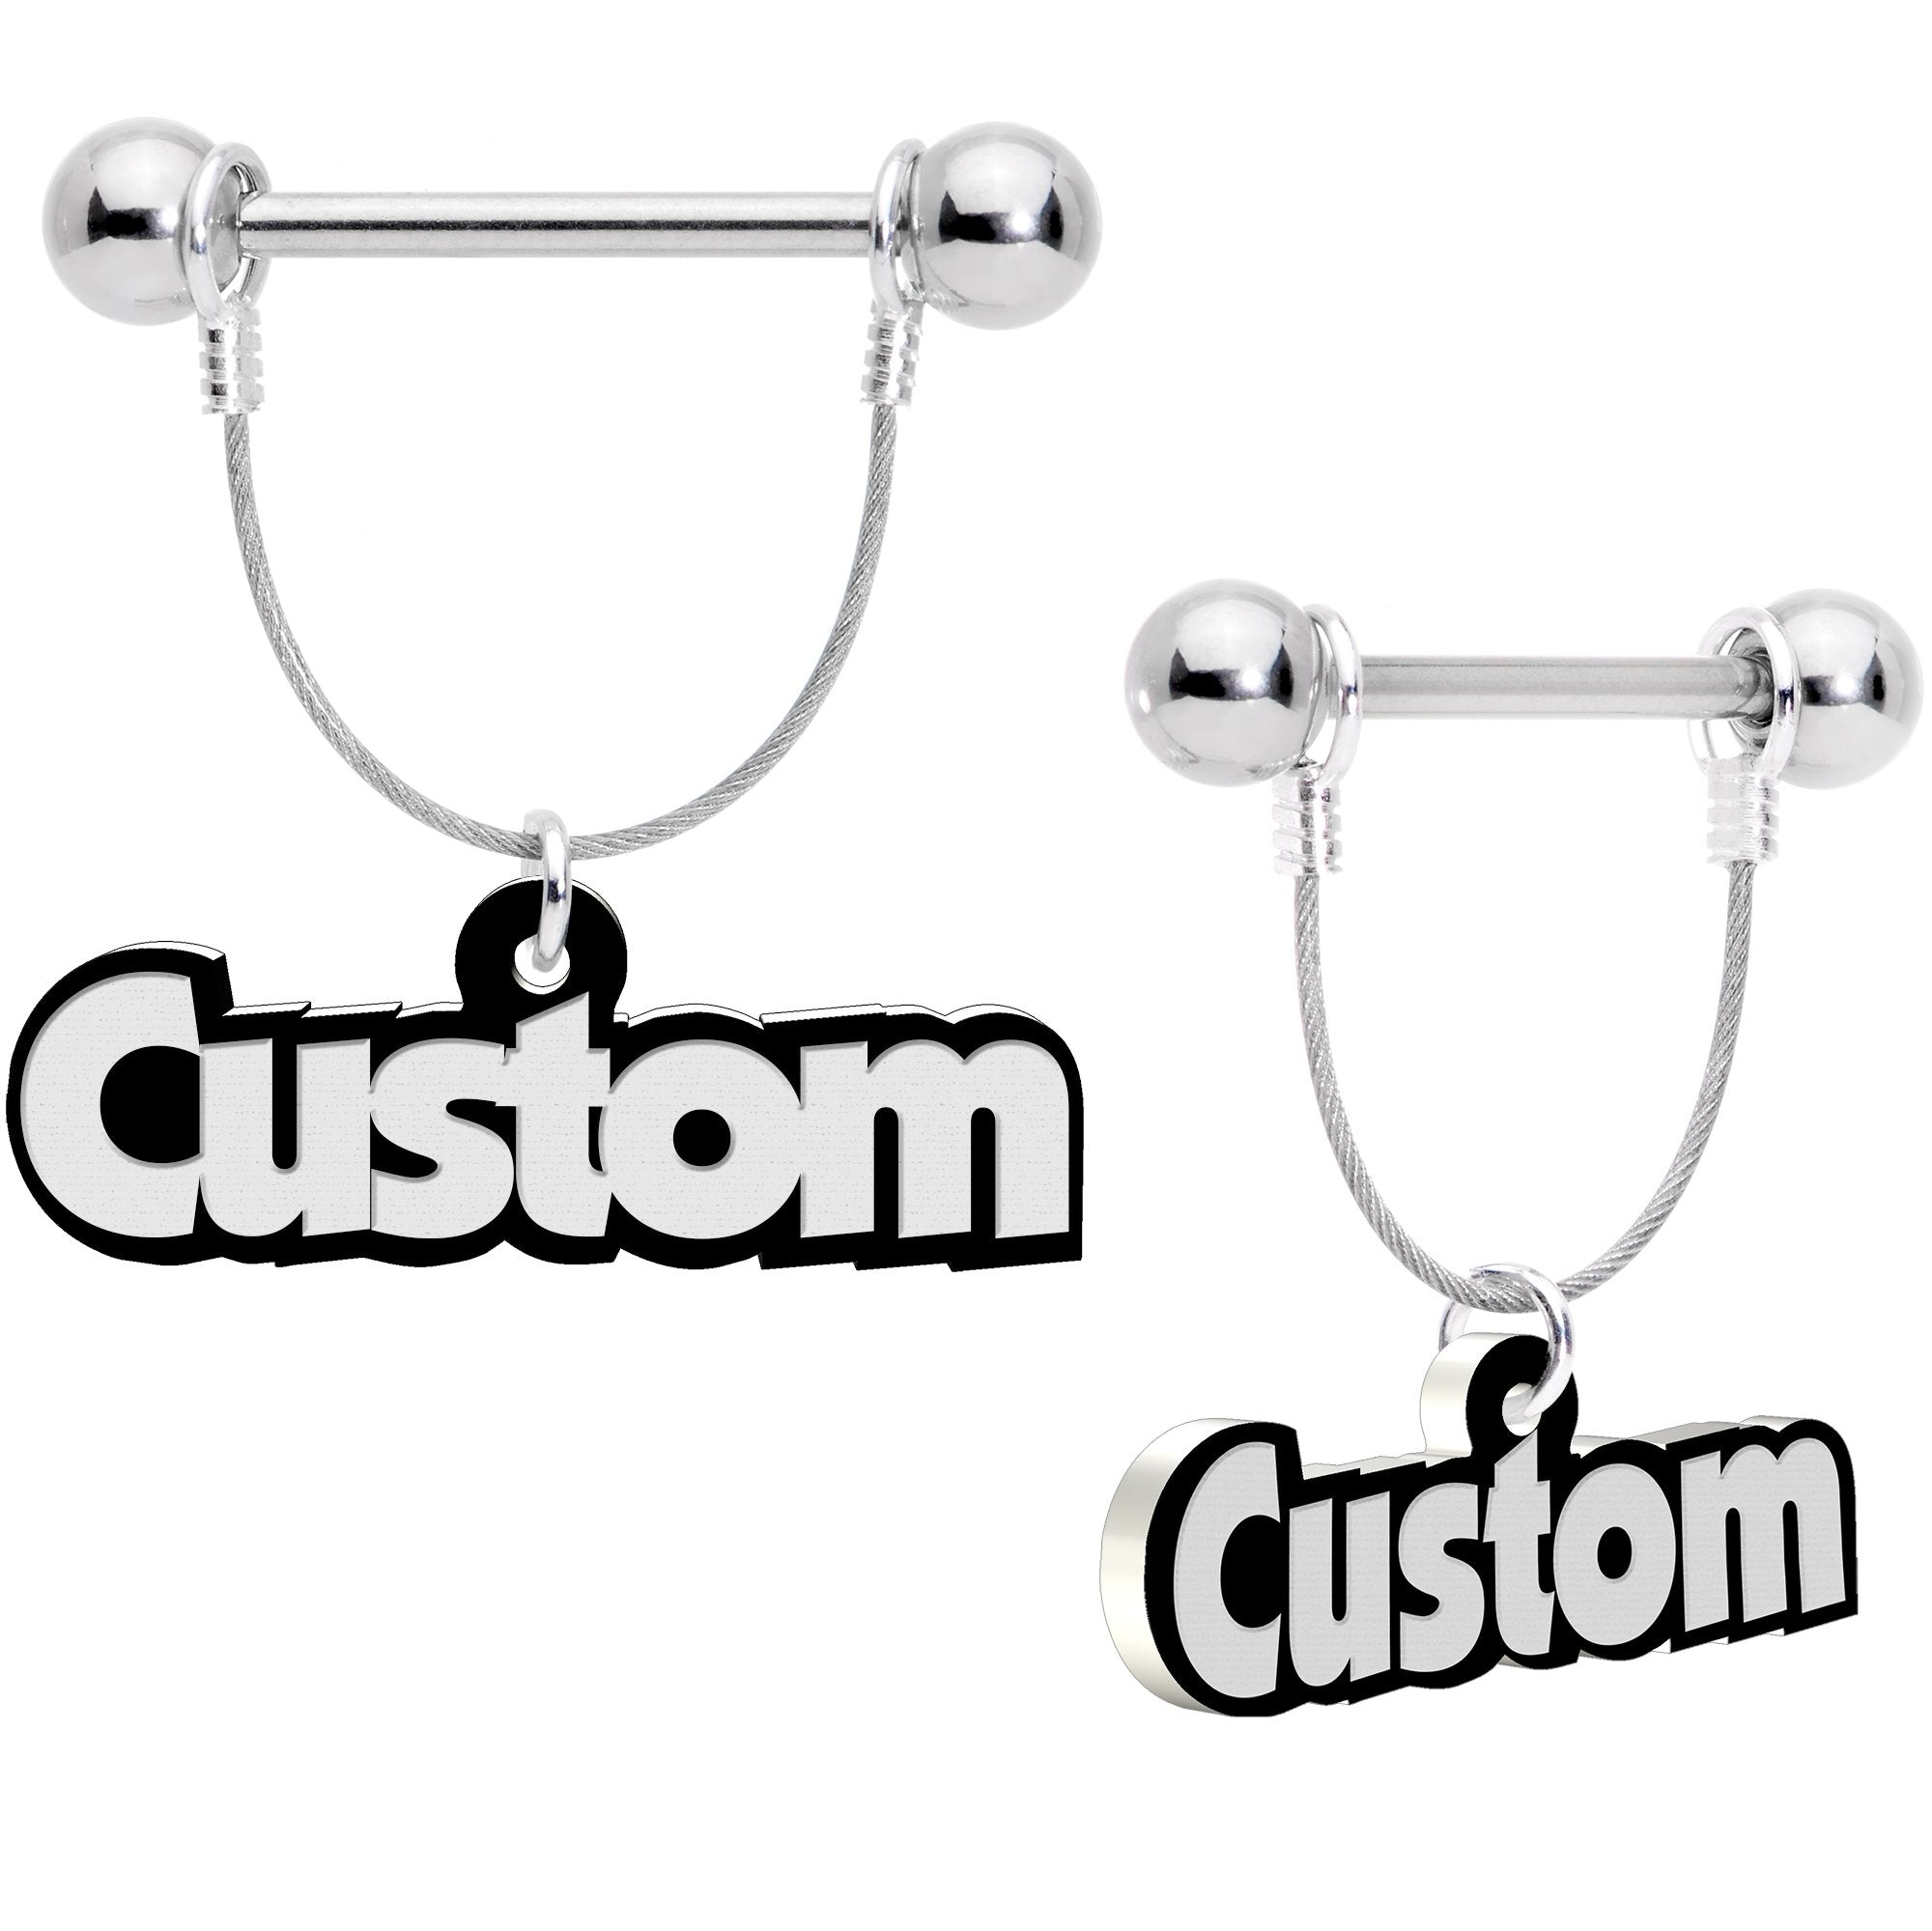 Custom Glow in the Dark Personalized Name Dangle Nipple Ring Set